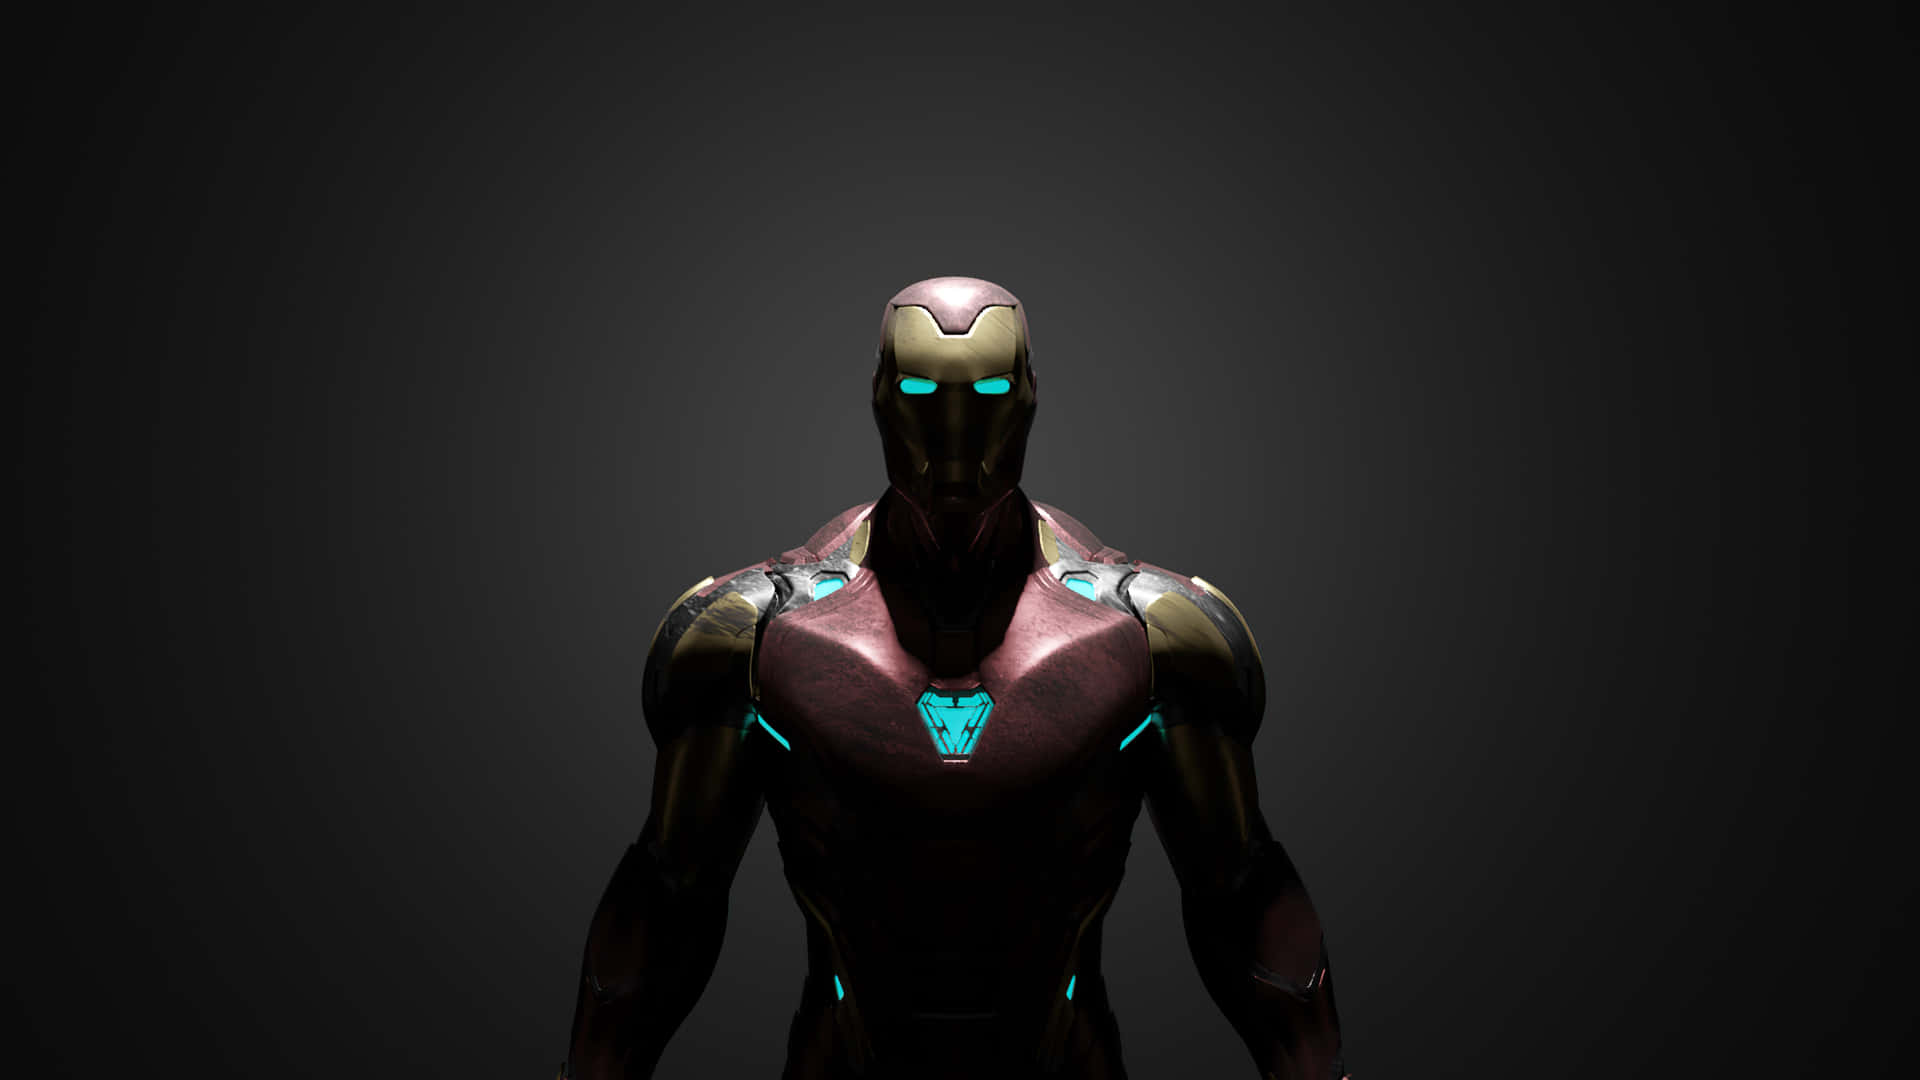 Hintergrundbildmit Dem Marvel-superhelden Iron Man